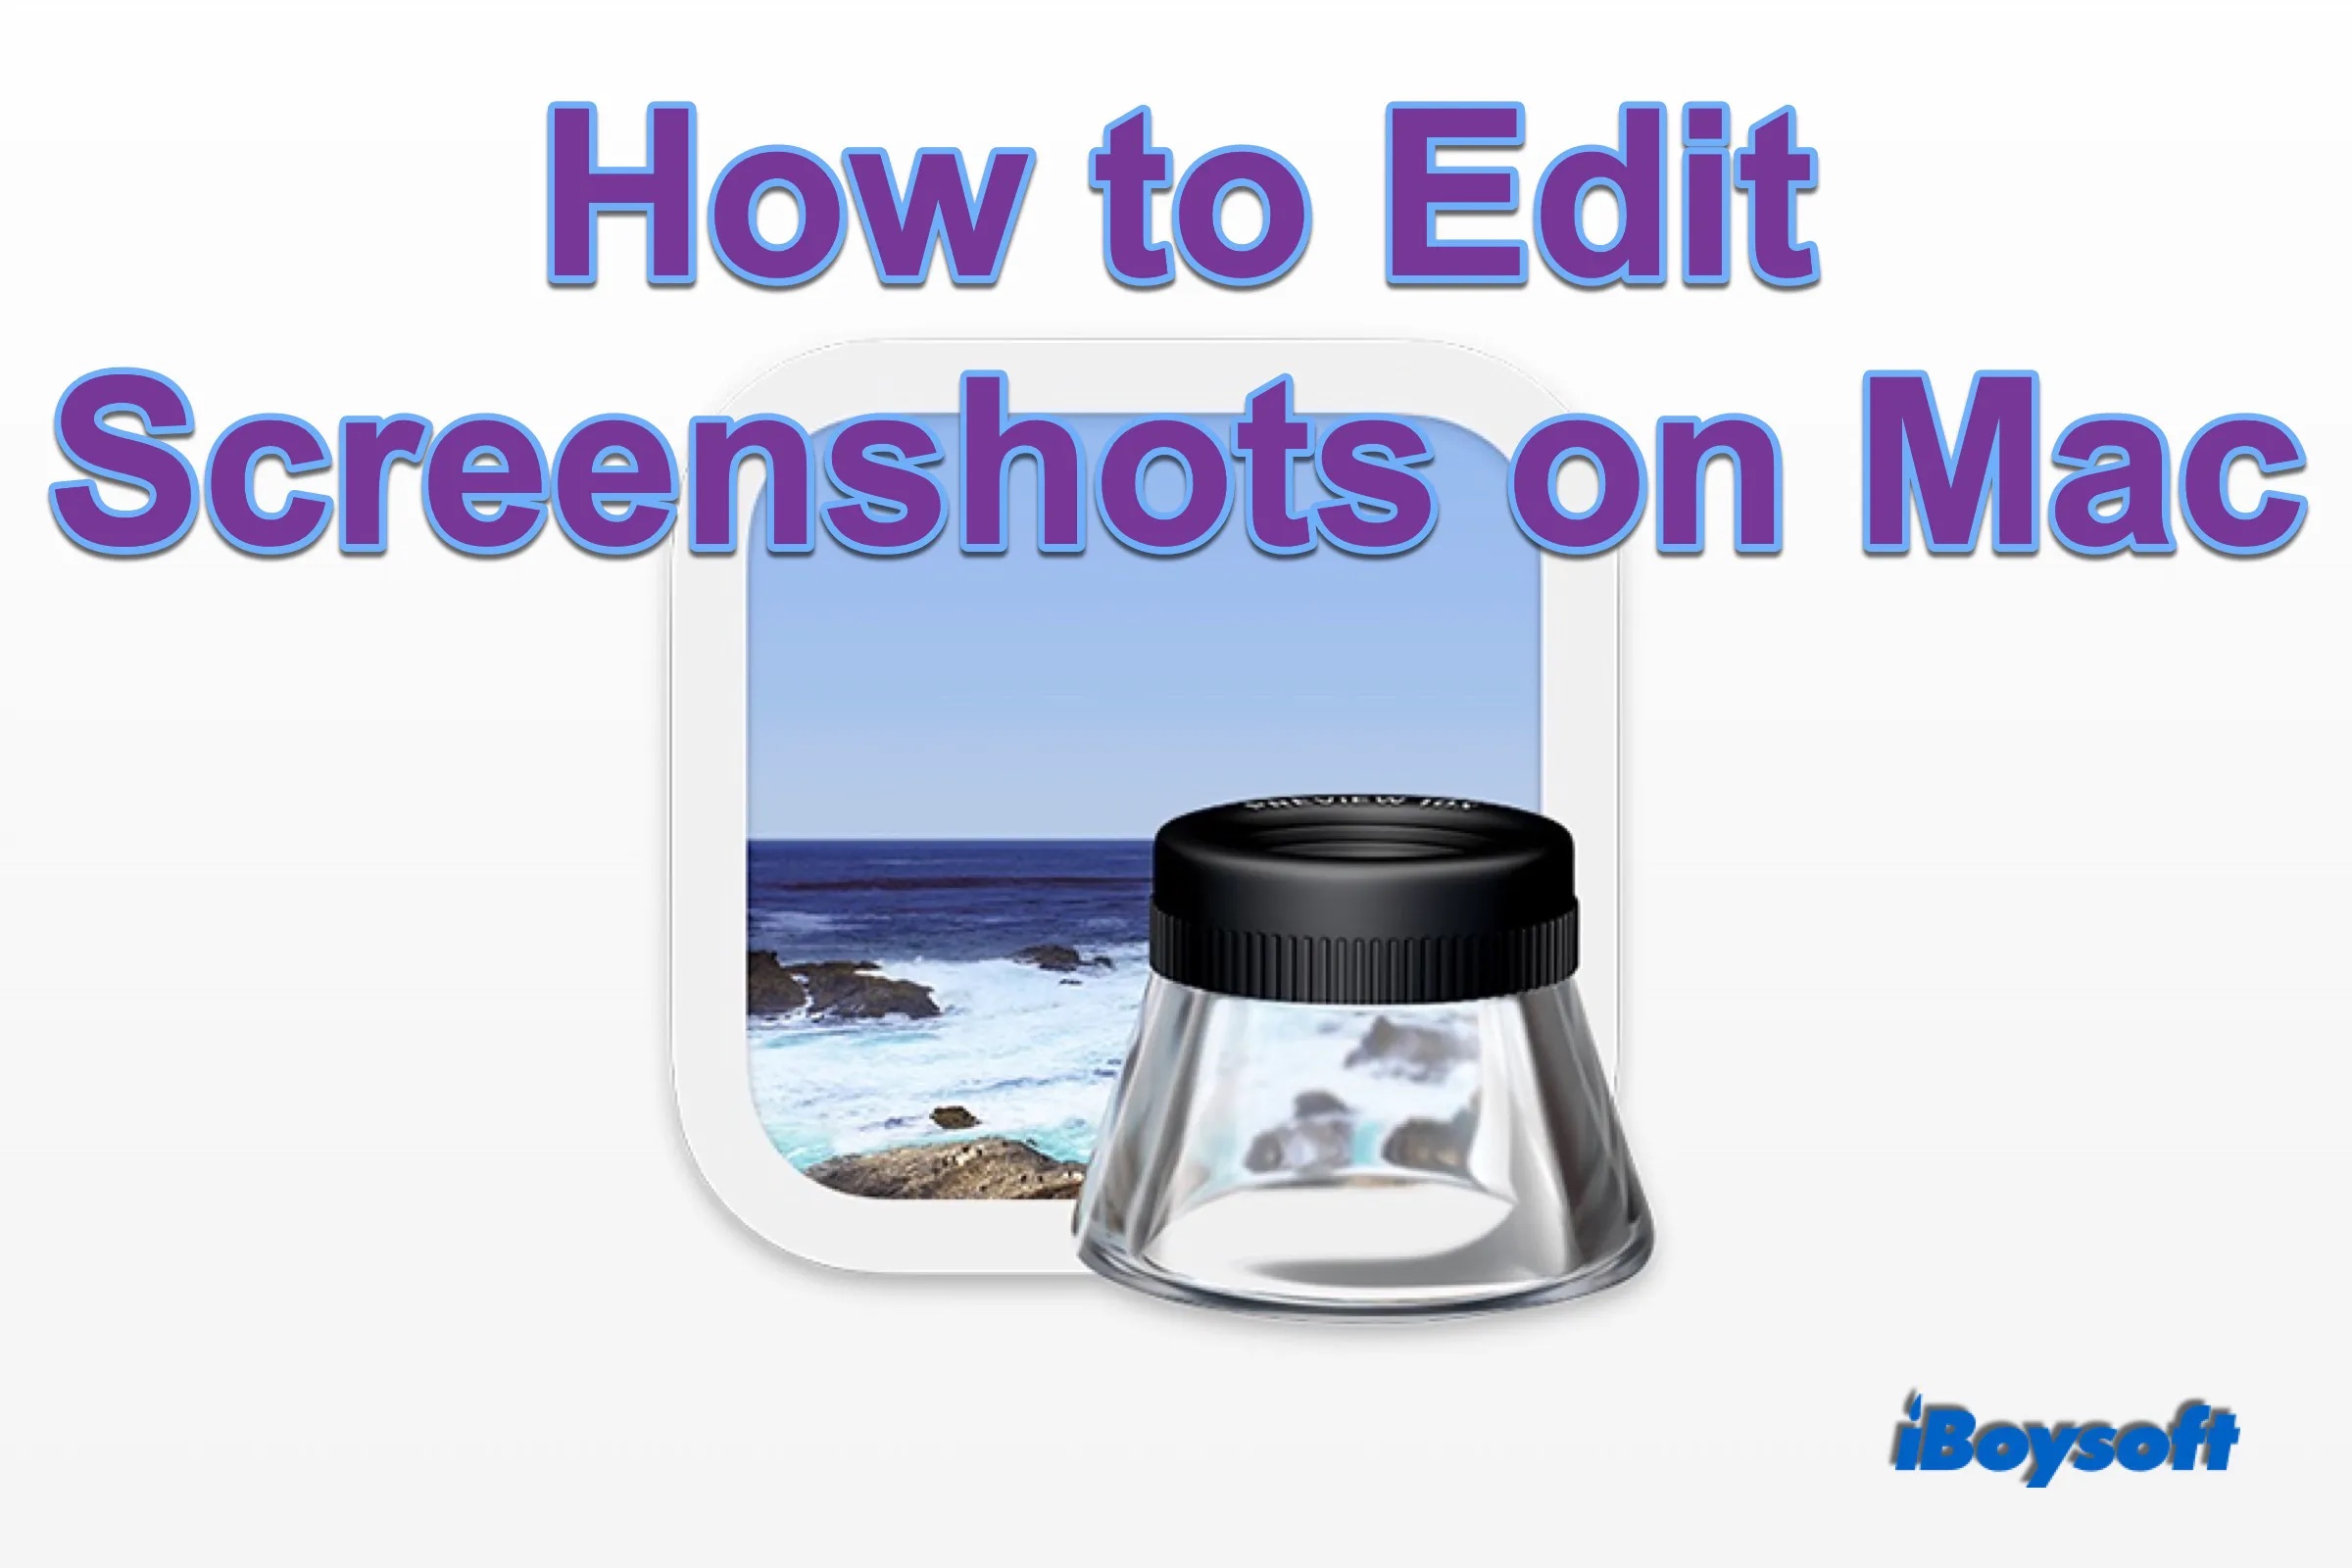 edit screenshots on Mac